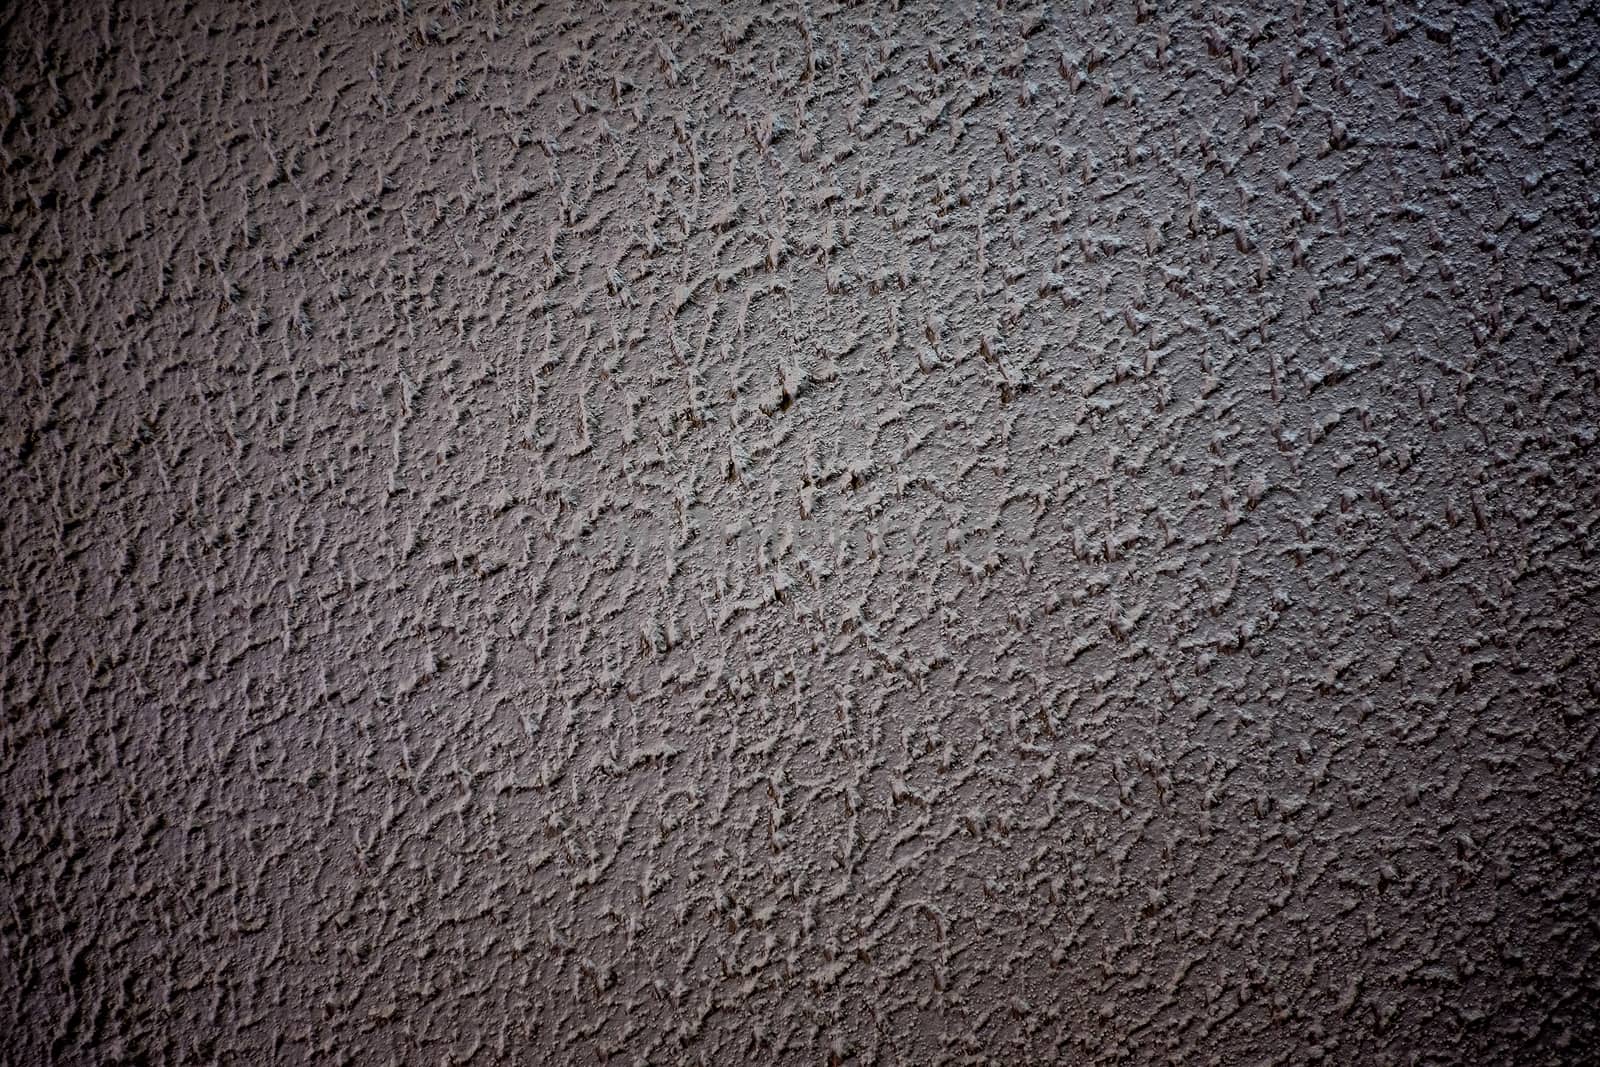 cement mortar wall texture